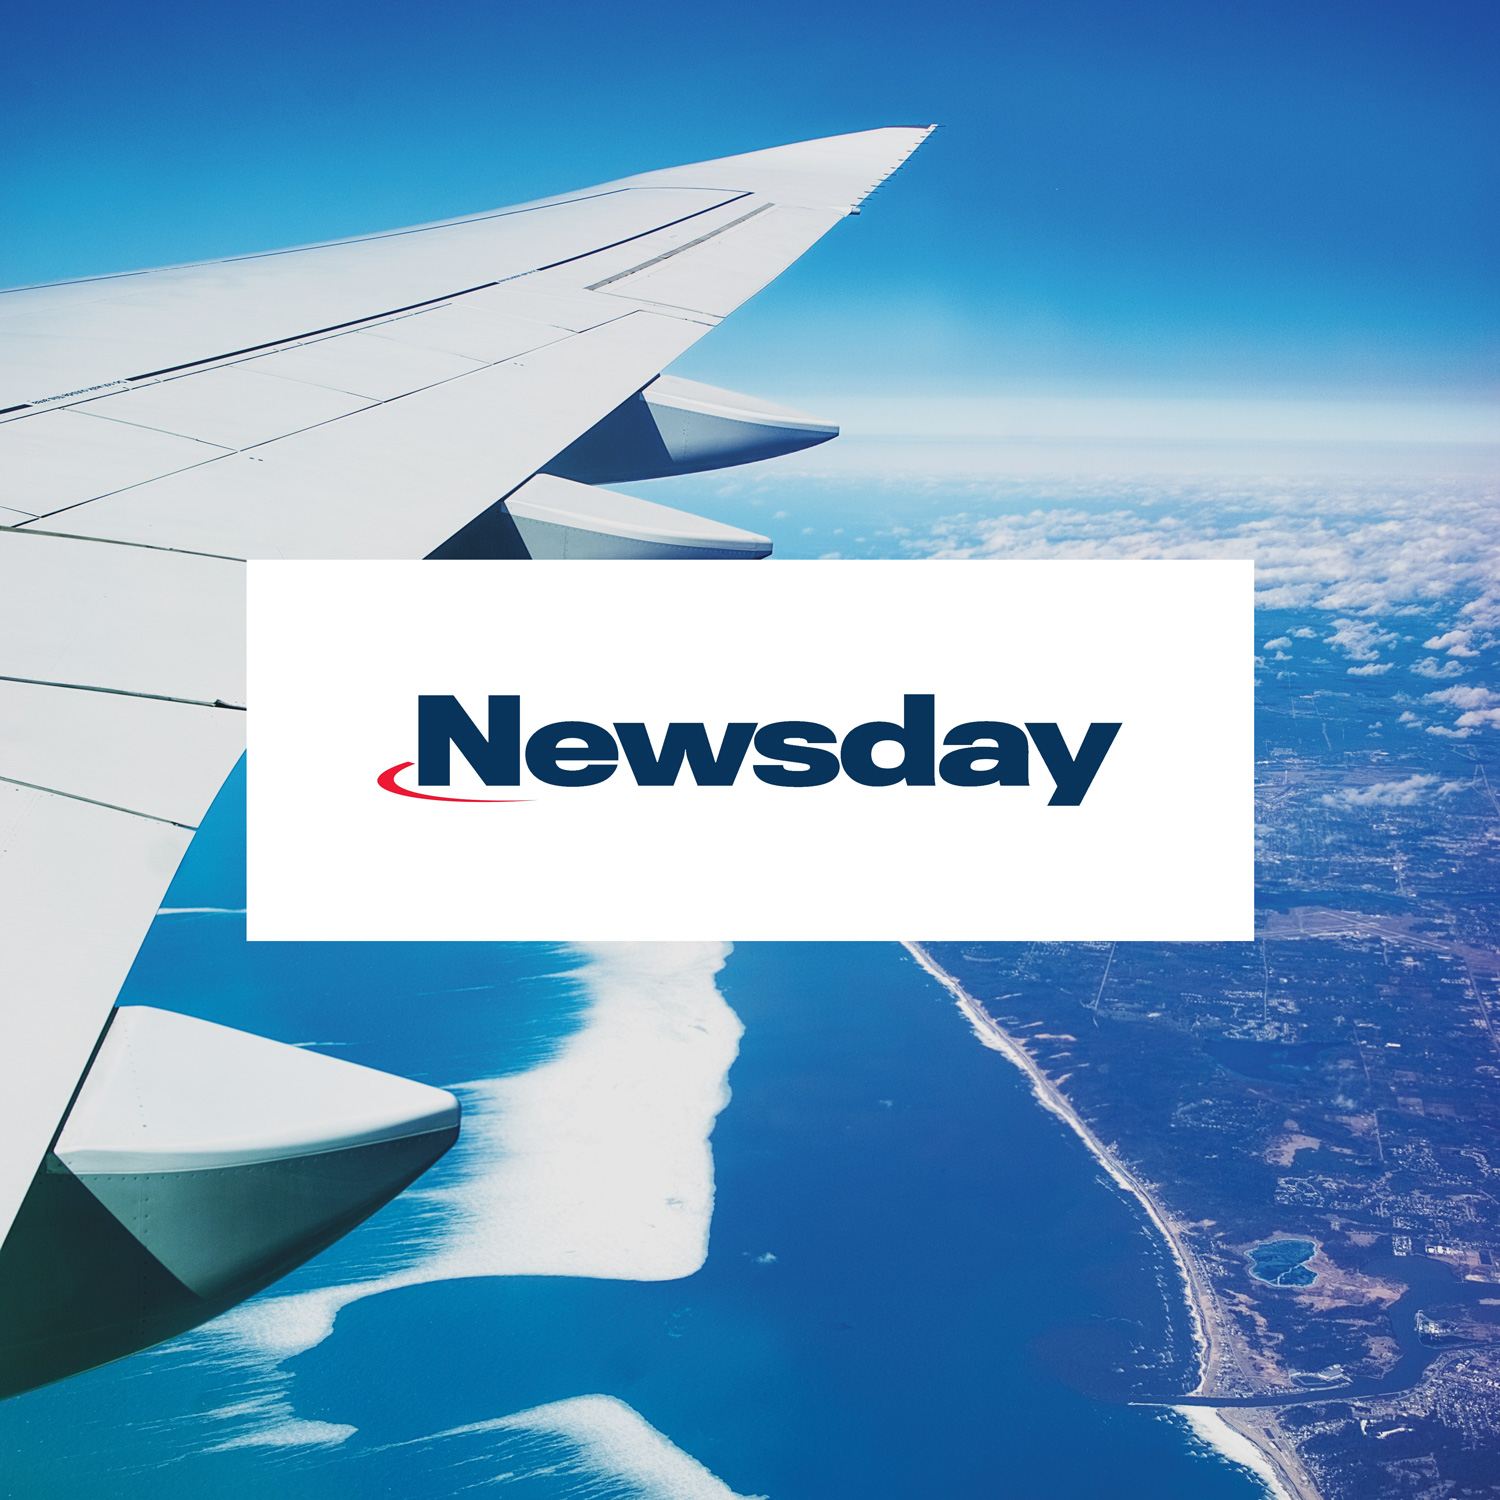 Courtyard Travel featured in Newsday, "Long Islanders make travel a grandchildren adventure"